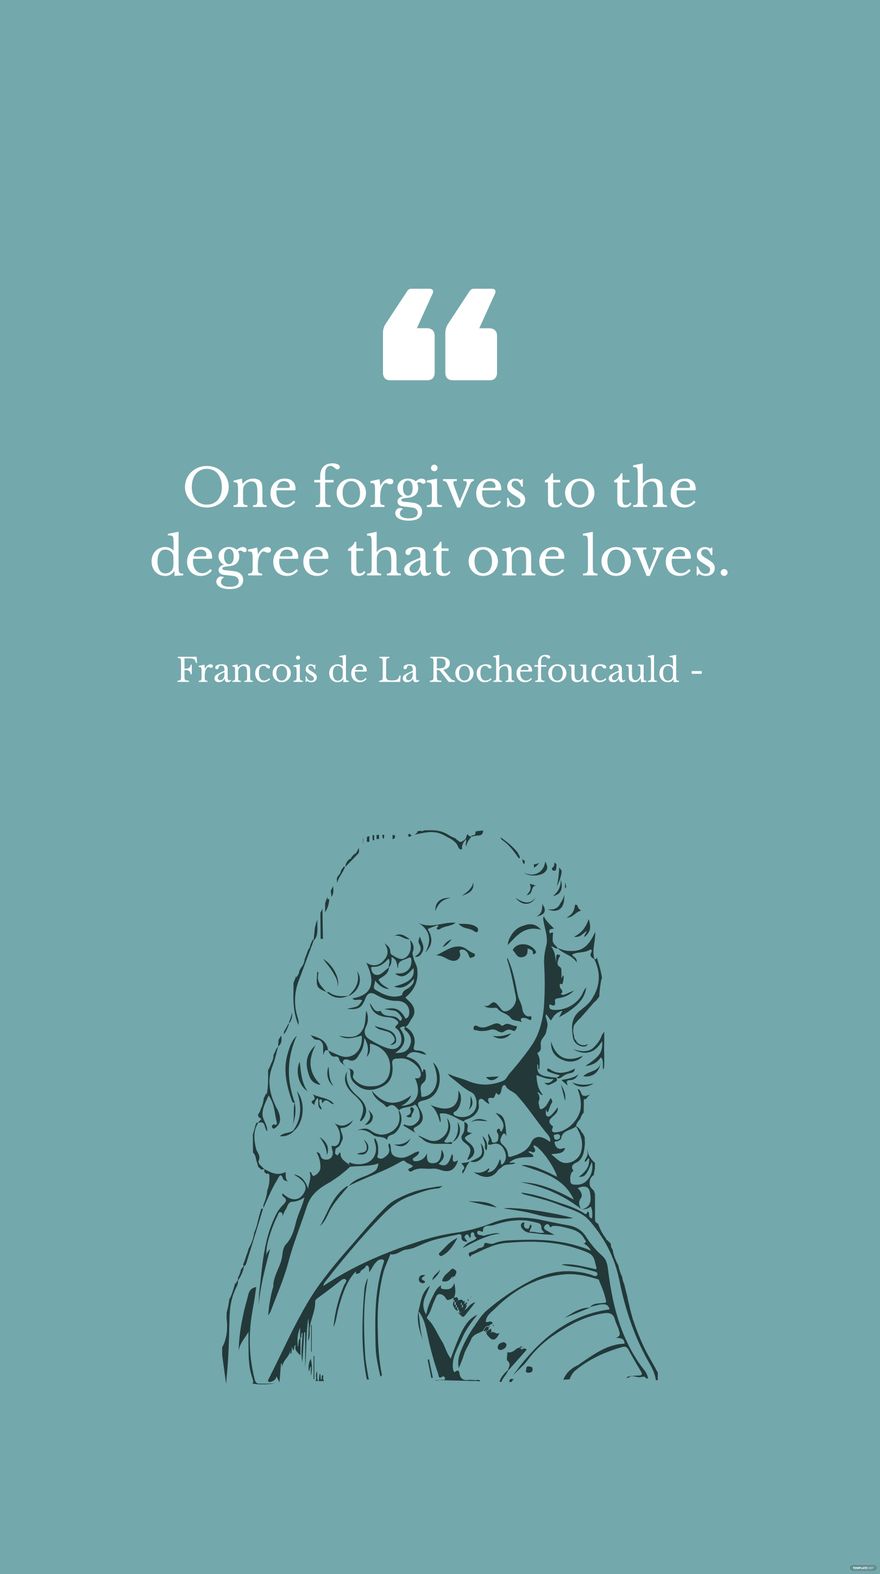 Francois de La Rochefoucauld - One forgives to the degree that one loves.